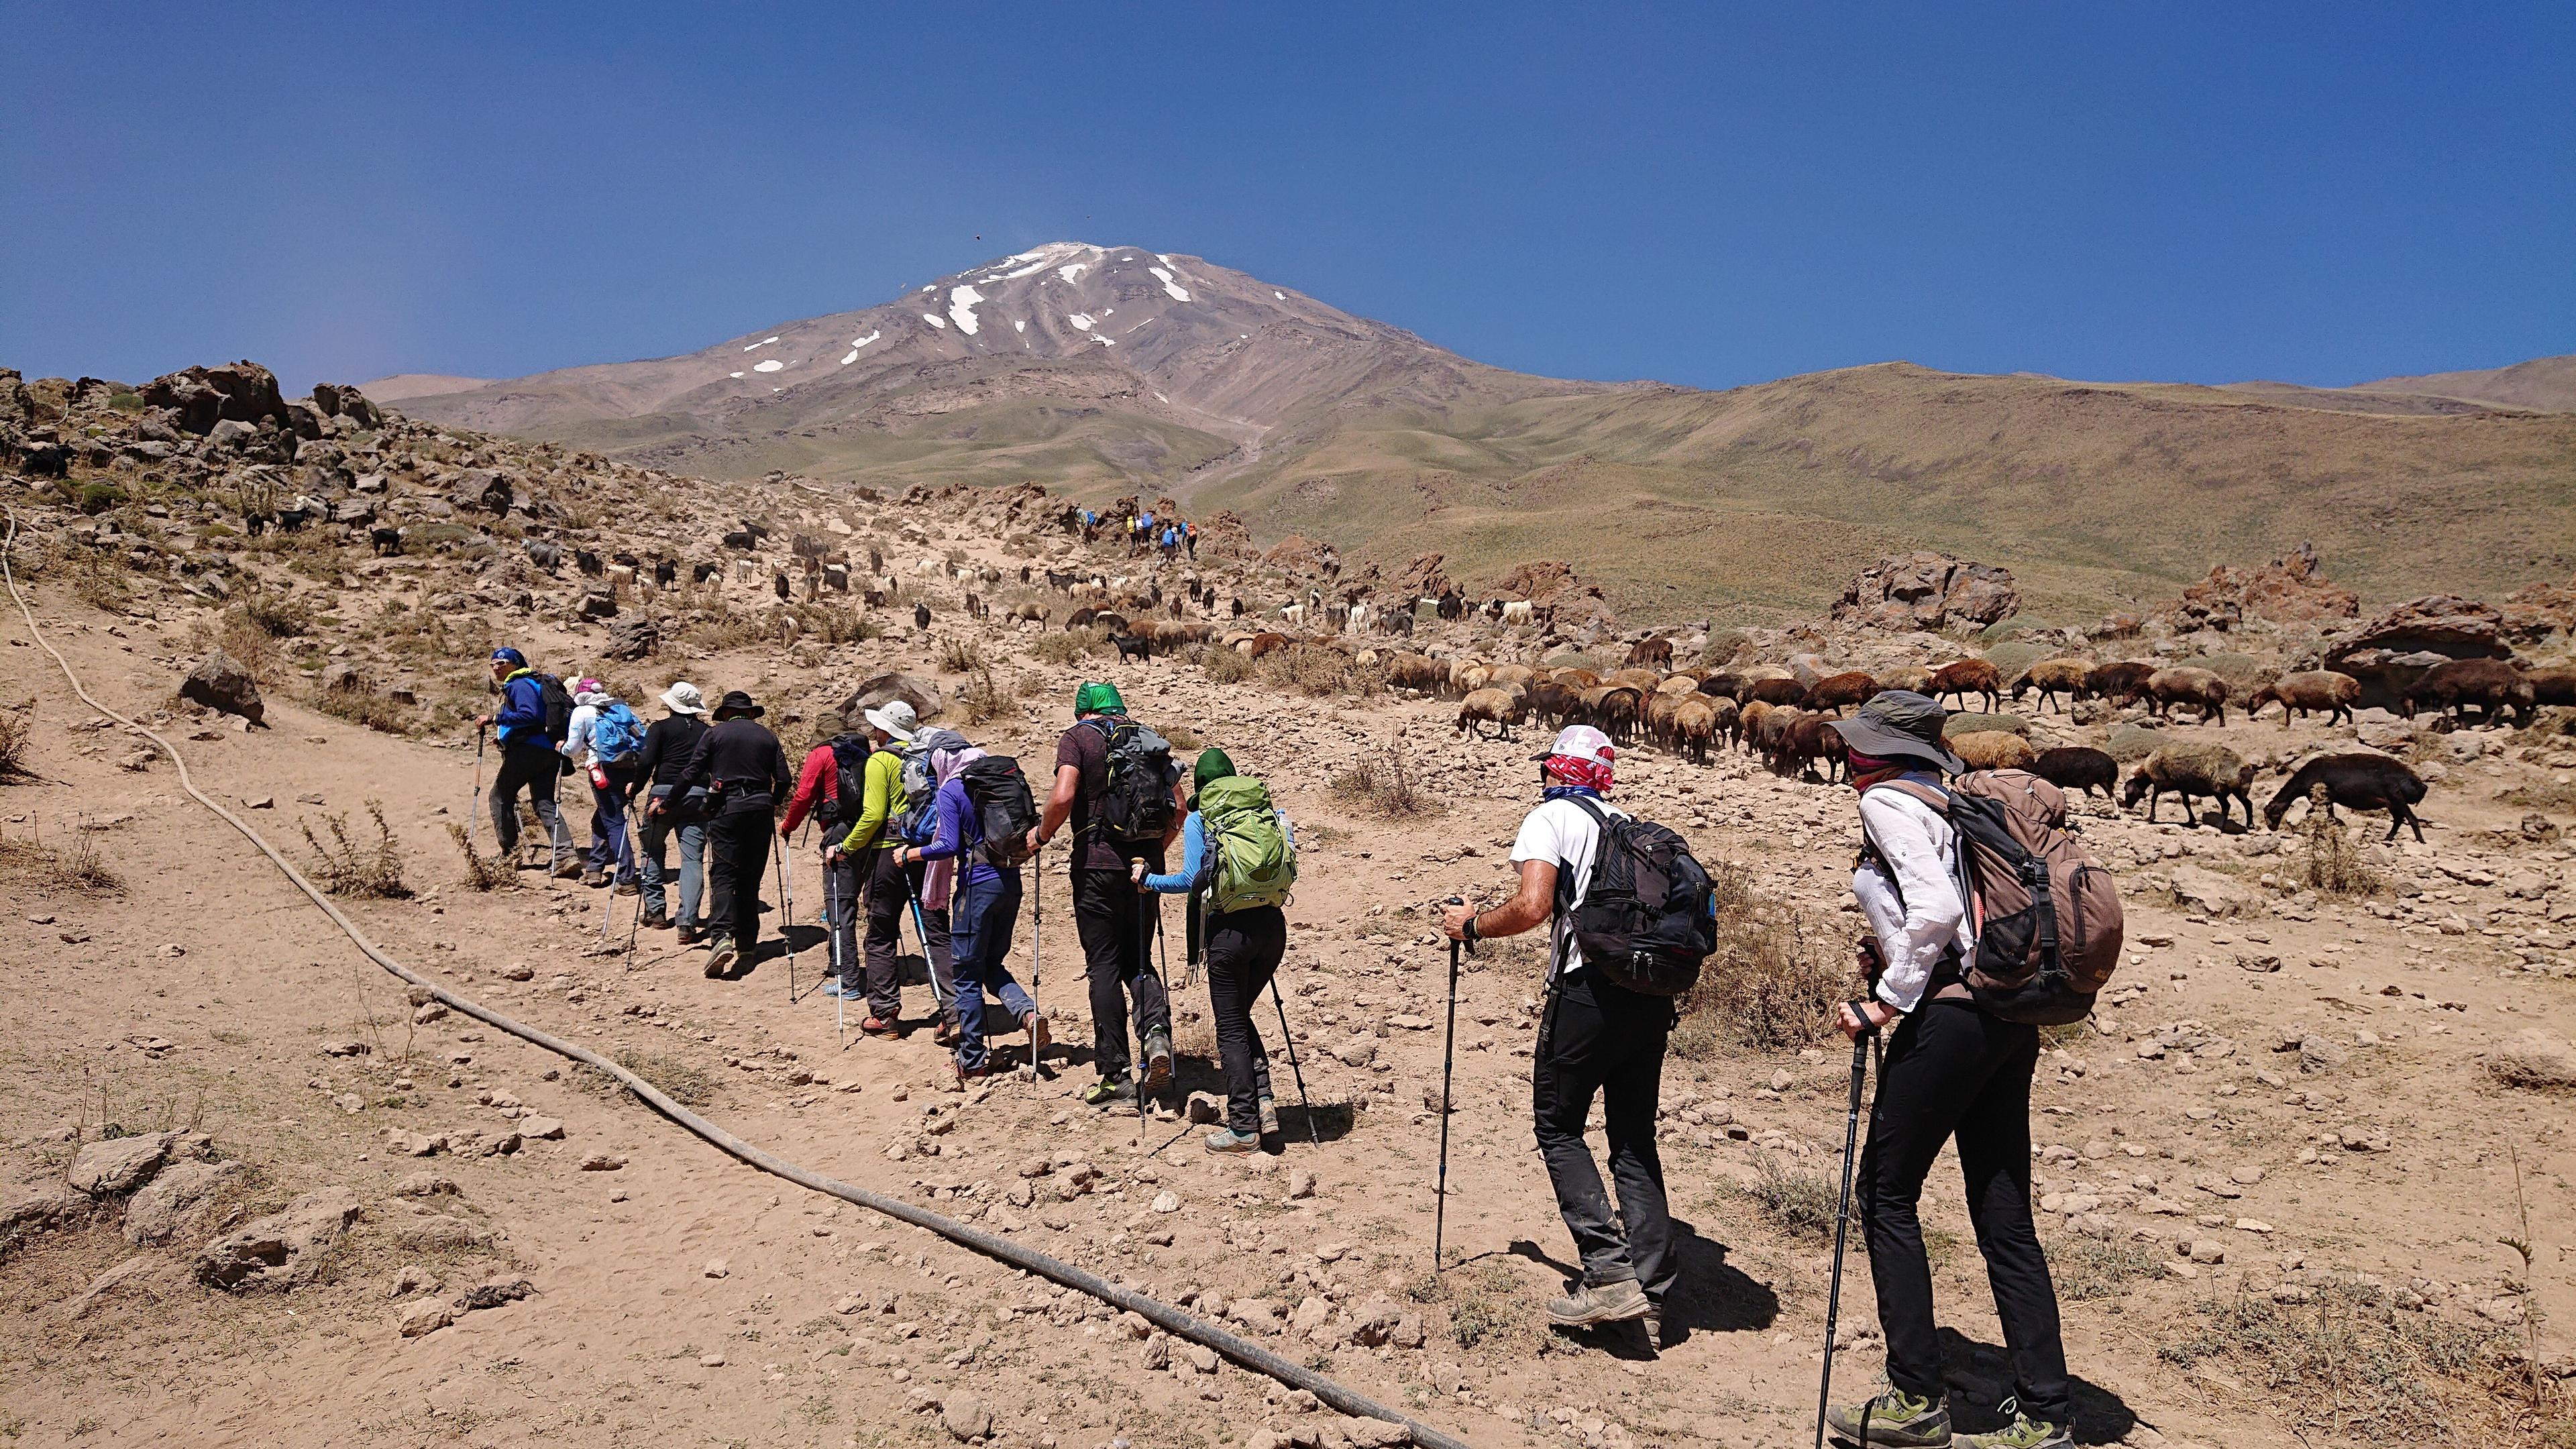 Ekspediciju činilo 12 planinara iz pet zemalja - Avaz